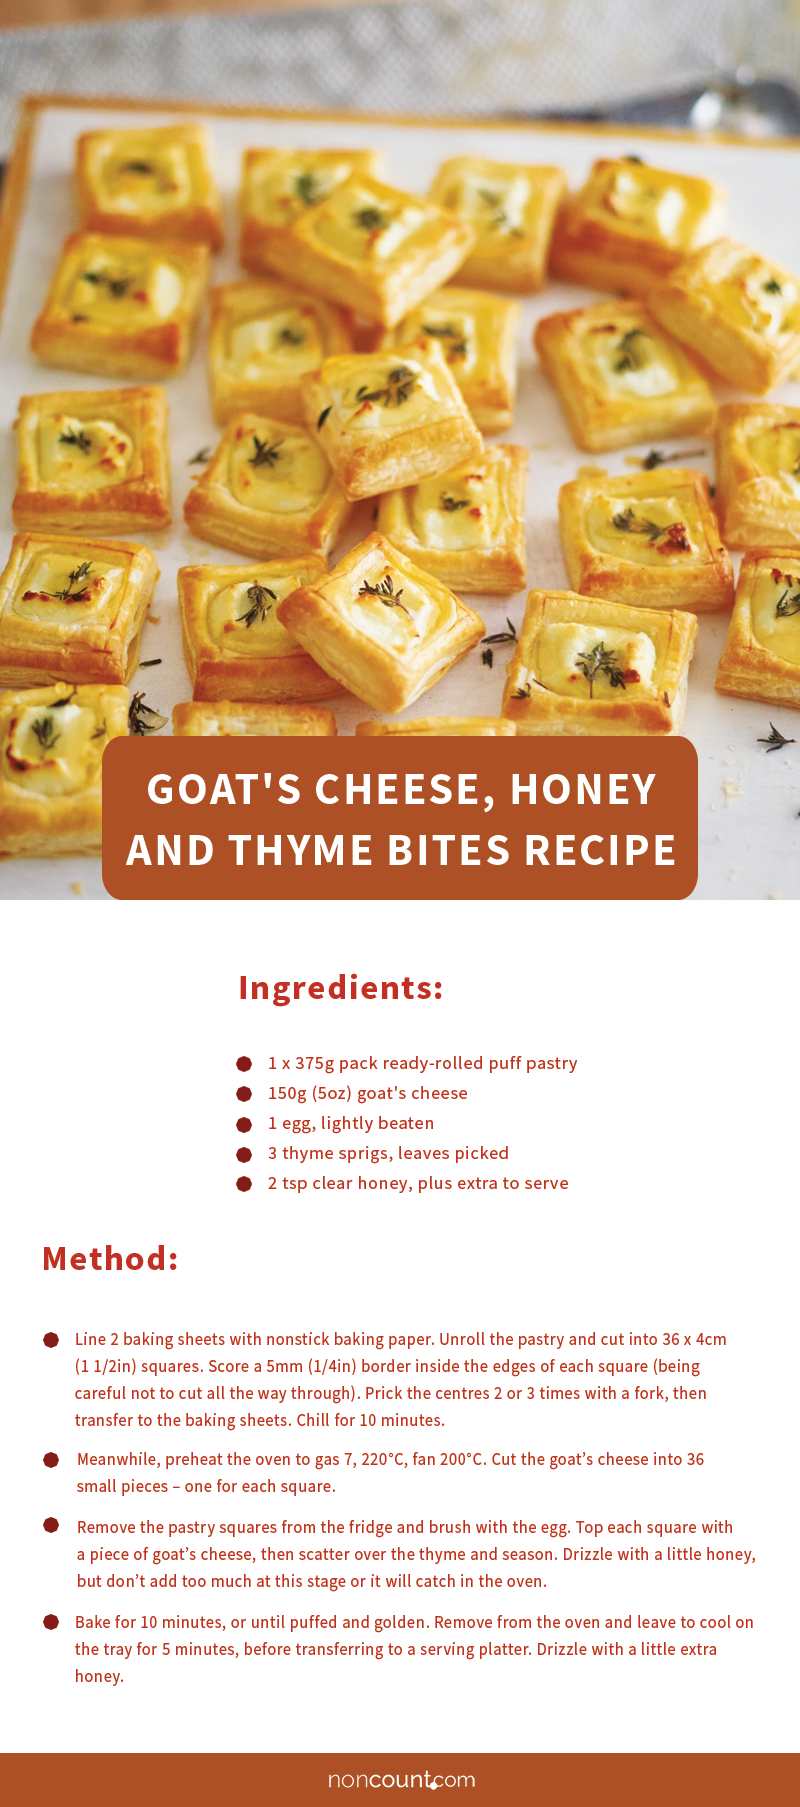 Goat's Cheese, Honey and Thyme Bites Recipe